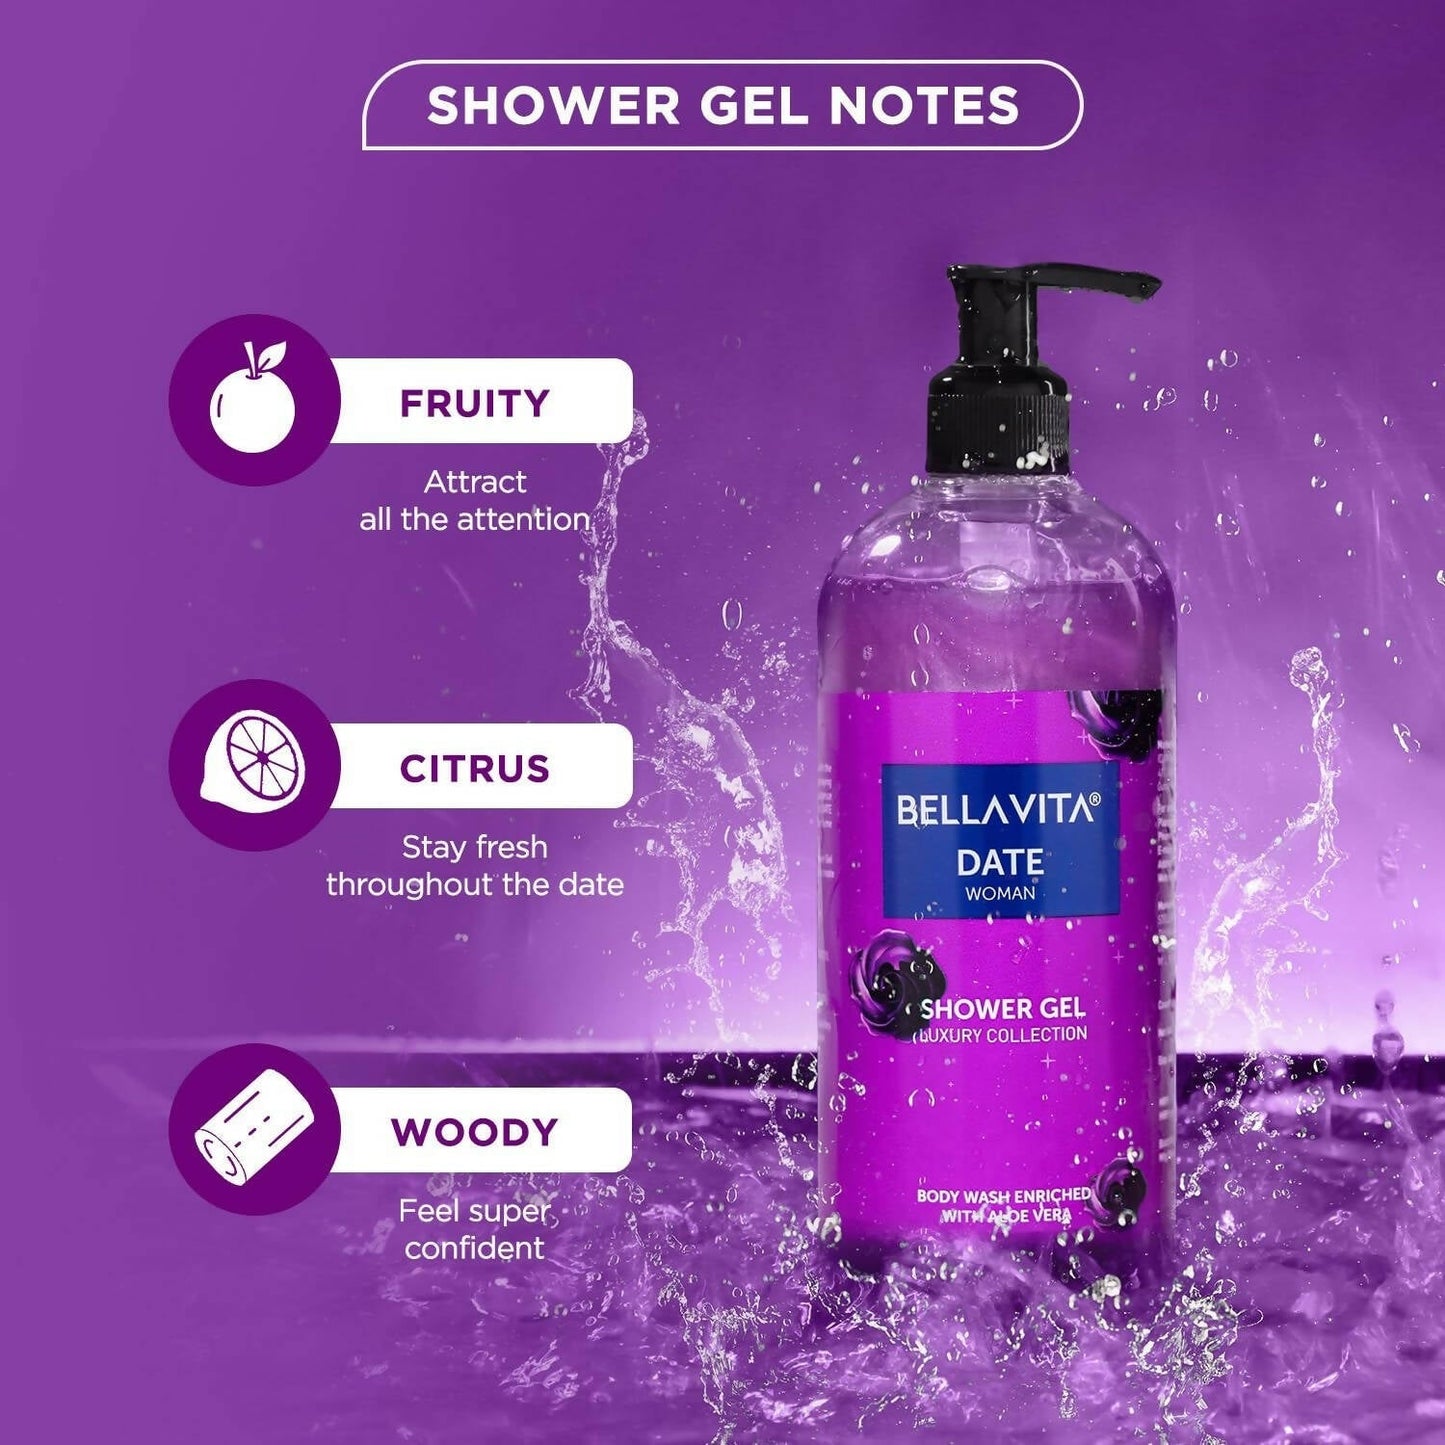 Bella Vita Luxury Date Woman Body Wash Refreshing Shower Gel